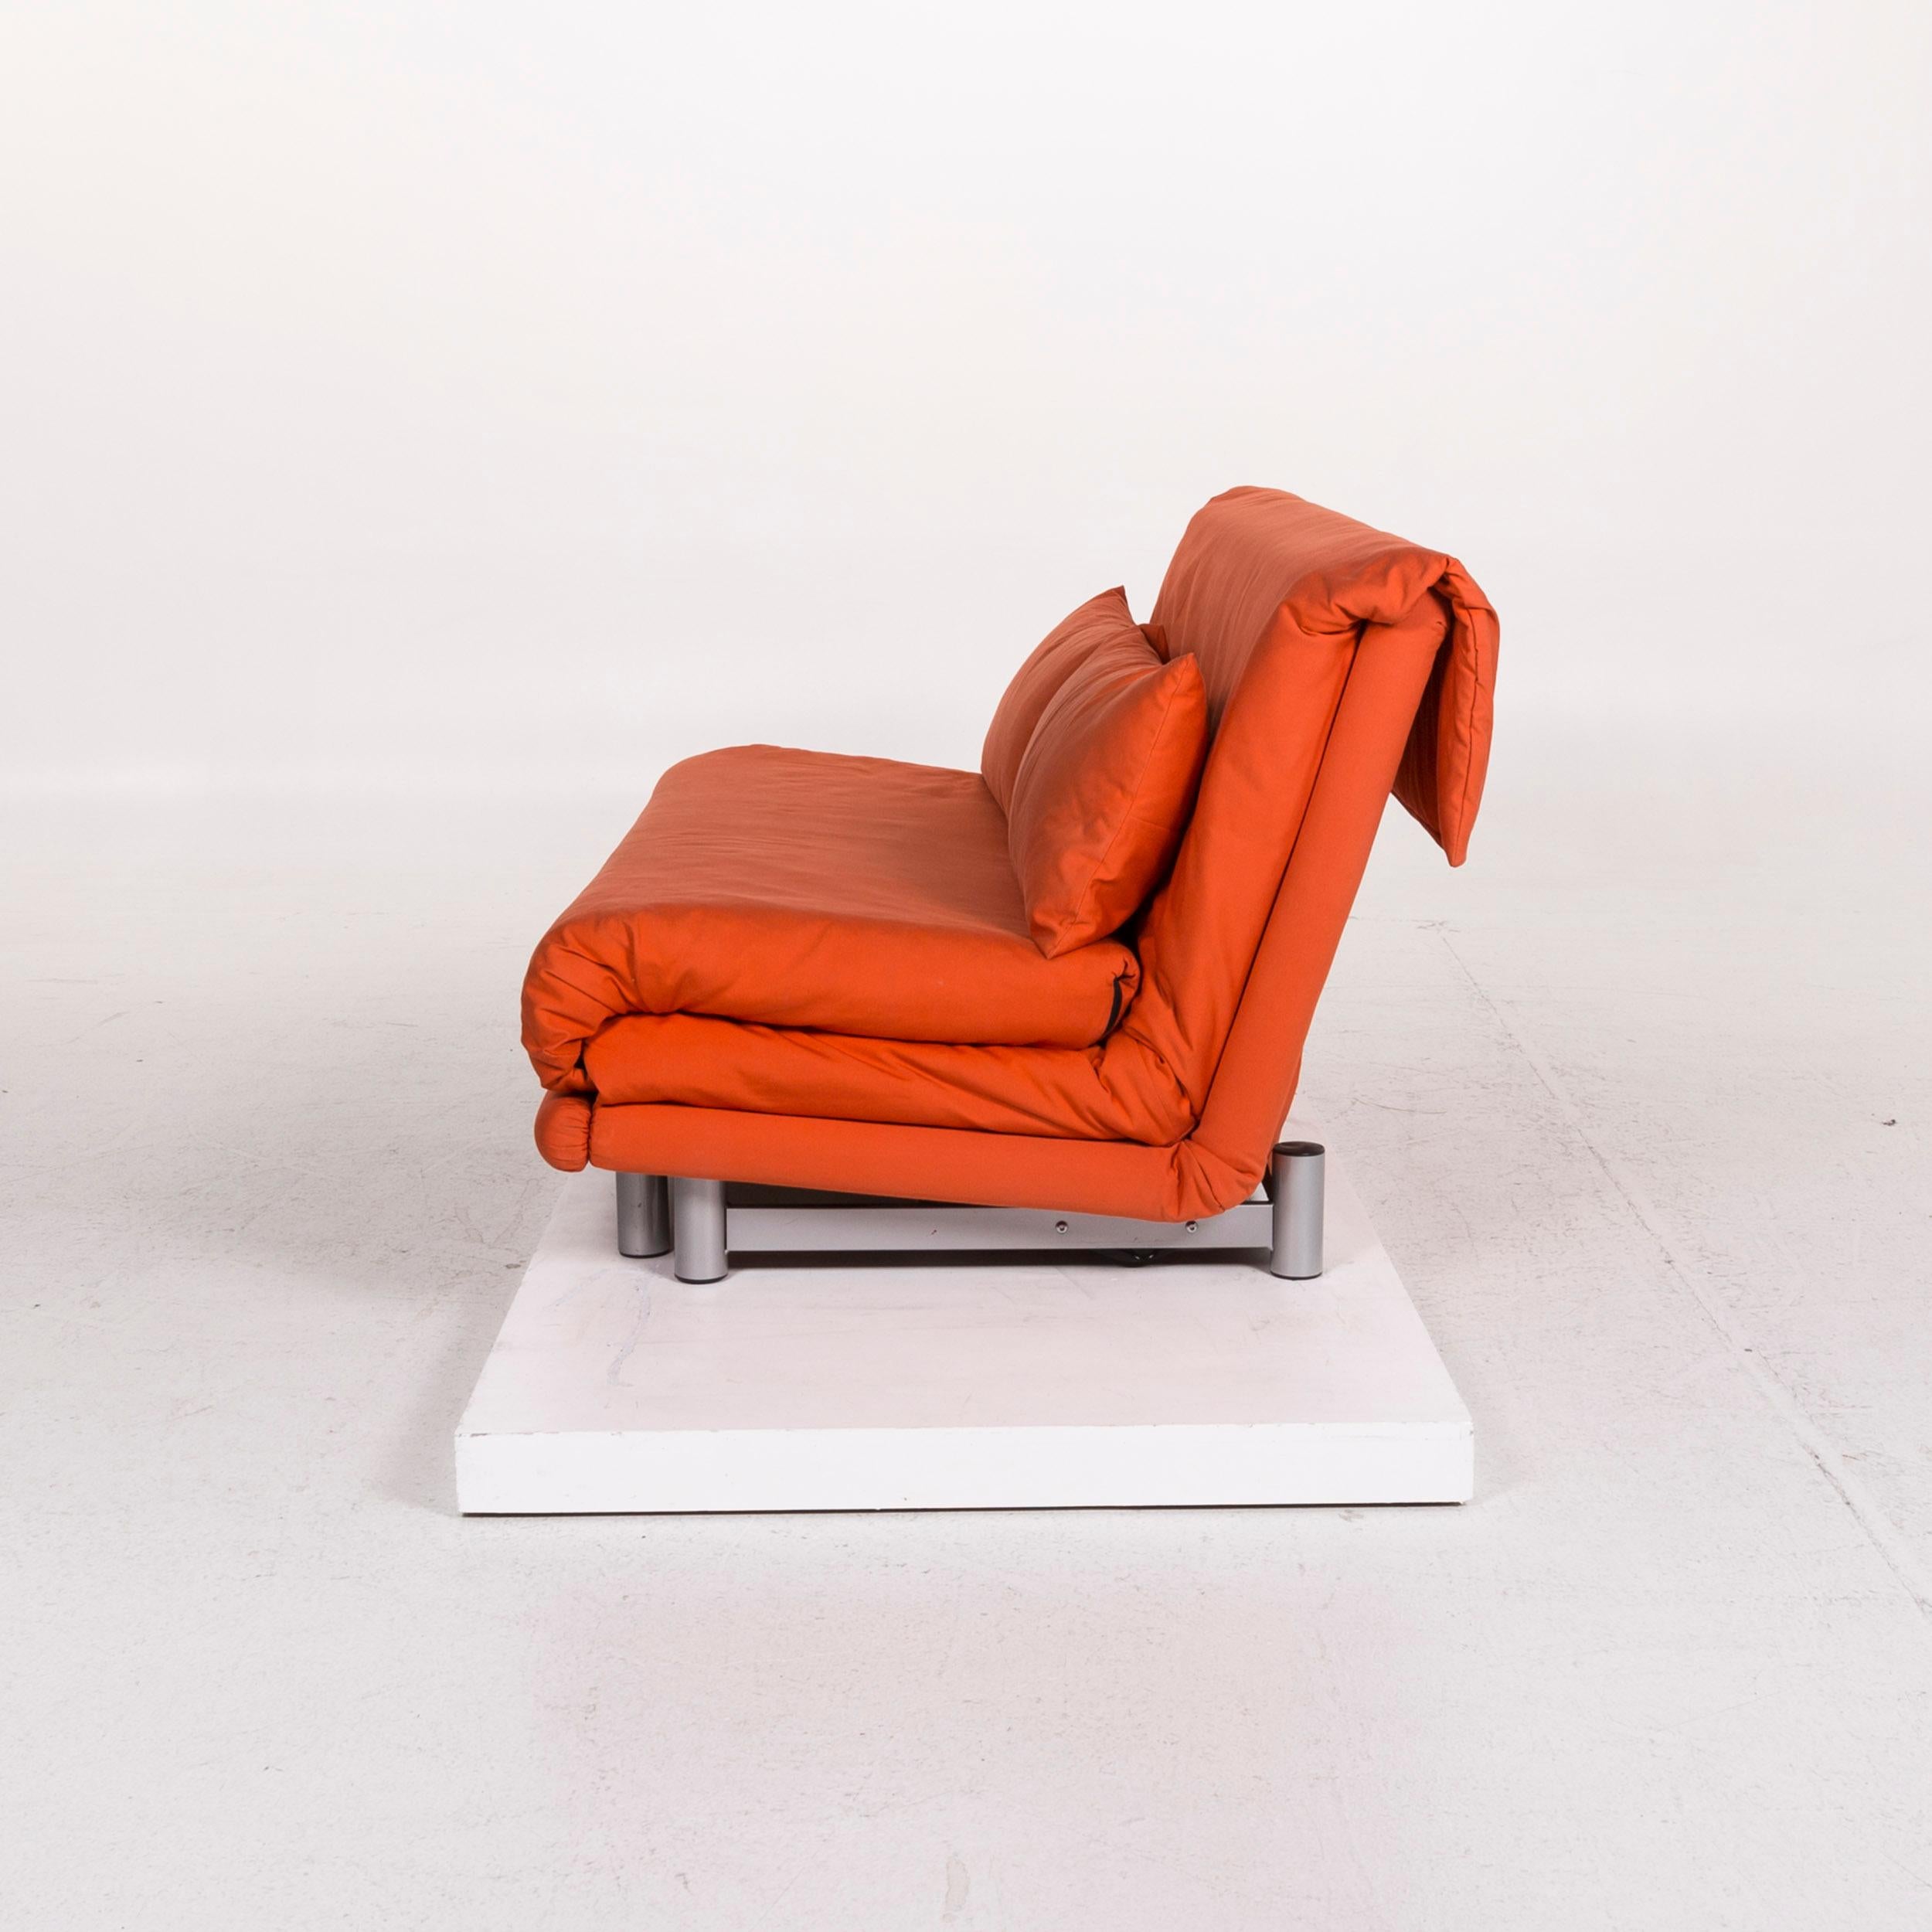 Ligne Roset Multy Fabric Sofa Bed Orange Sofa Two-Seat Sleep Function 2